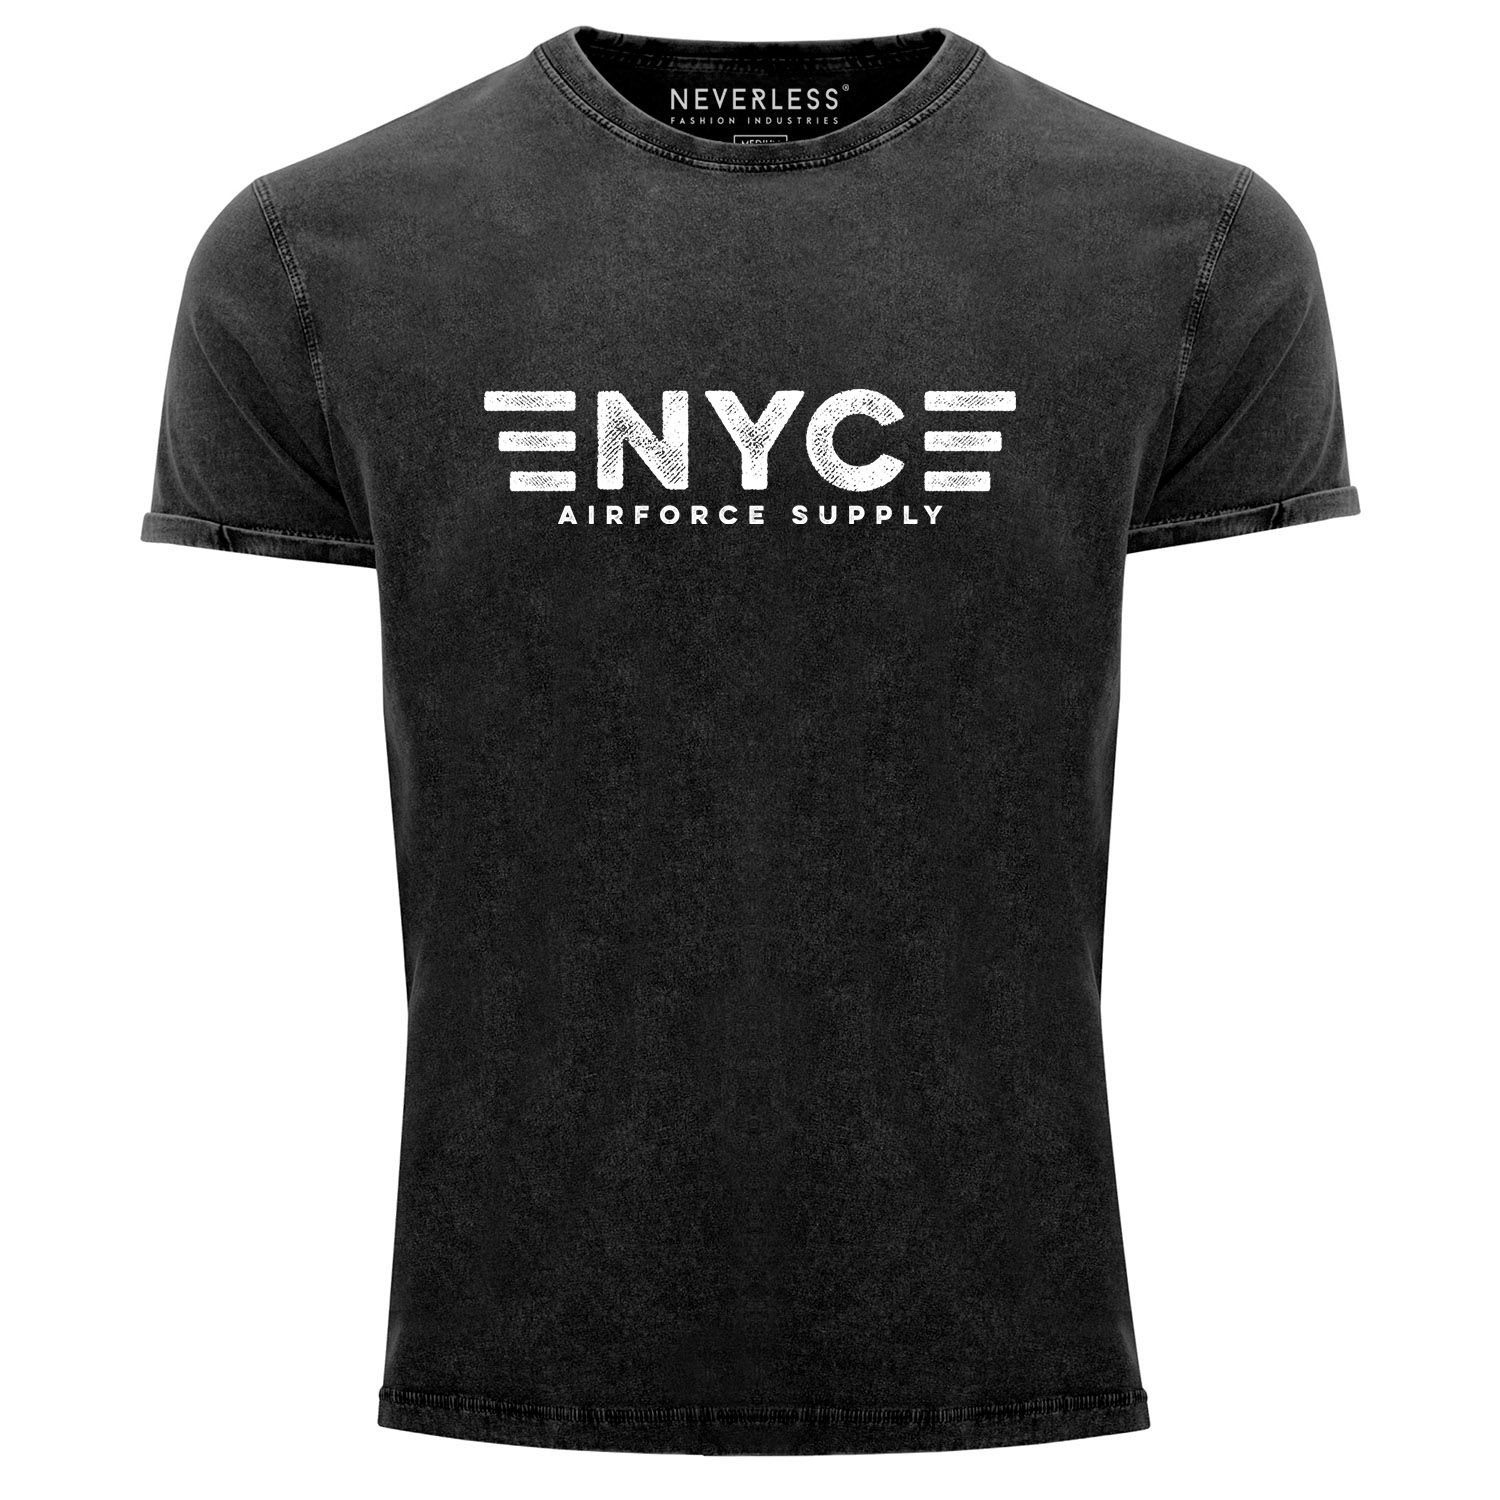 T-Shirt City Aufdruck mit Supply NYC Used Airforce Print Fit Neverless® Herren Shirt Vintage New York Neverless Printshirt Print Slim schwarz Print-Shirt Look